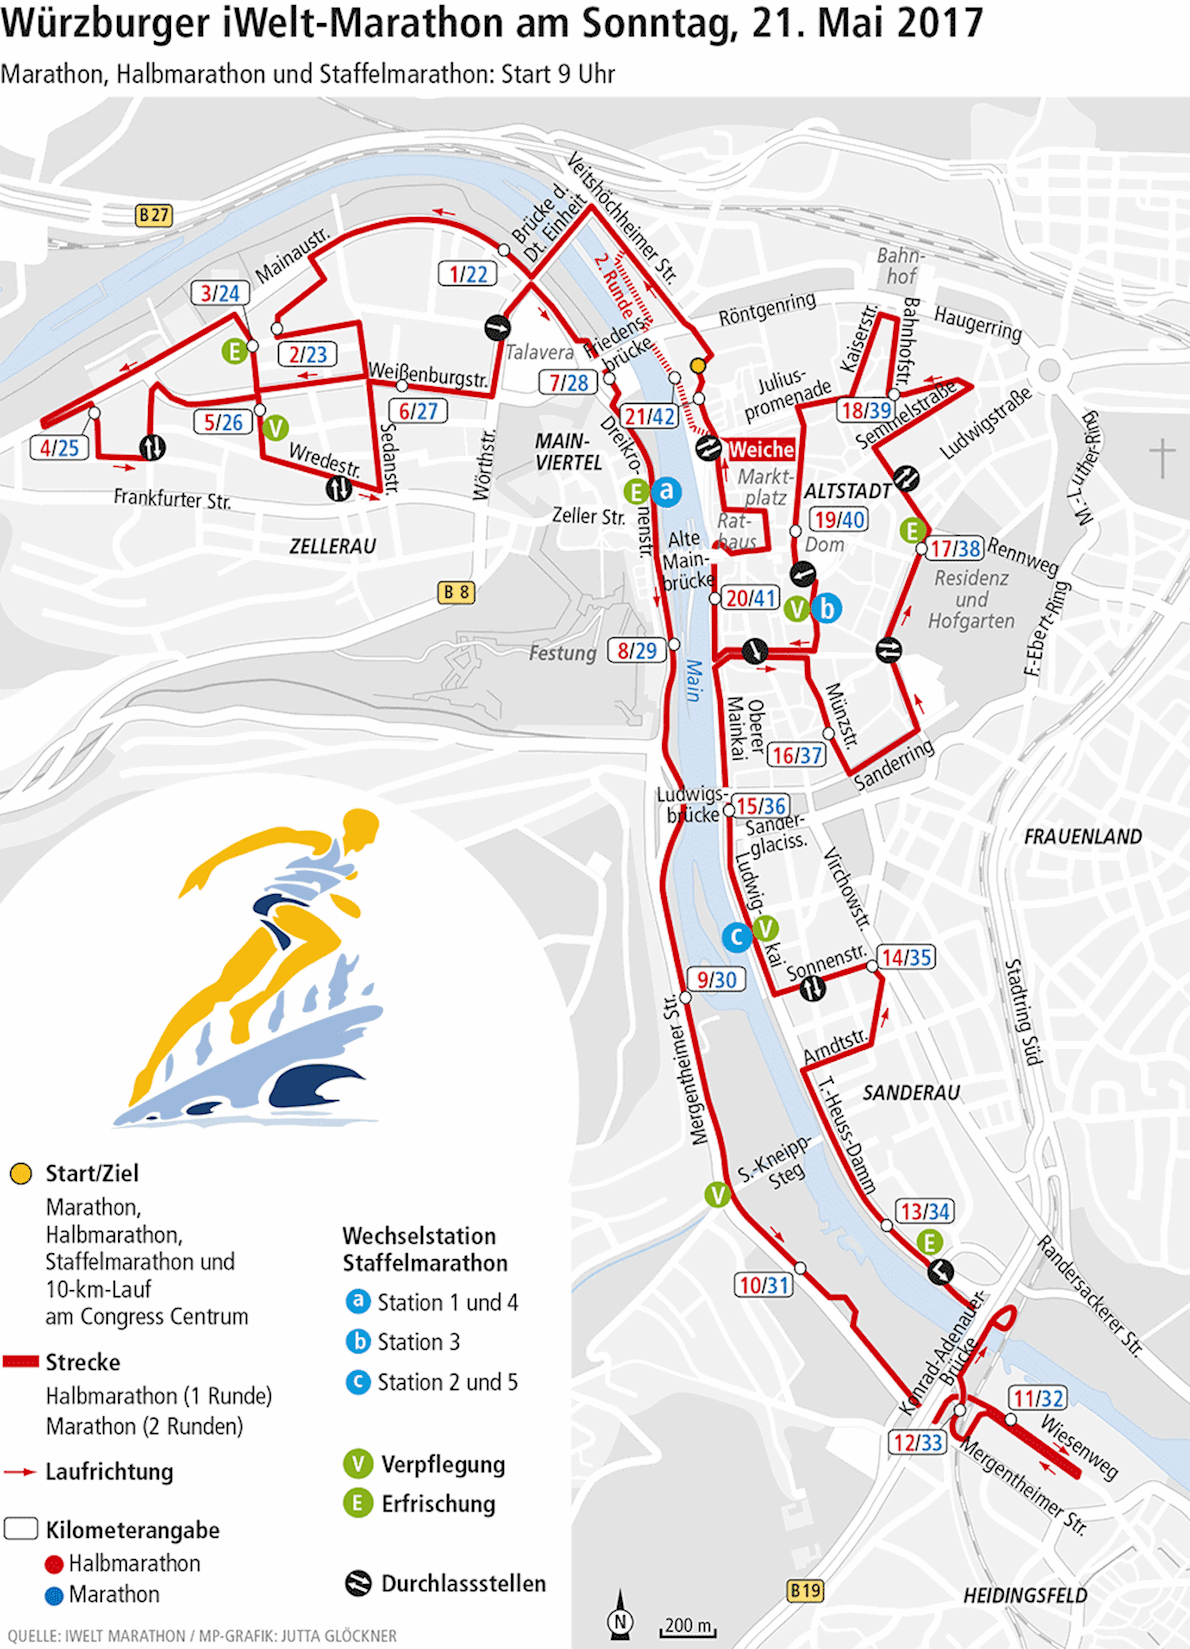 iWelt Marathon Würzburg Mappa del percorso